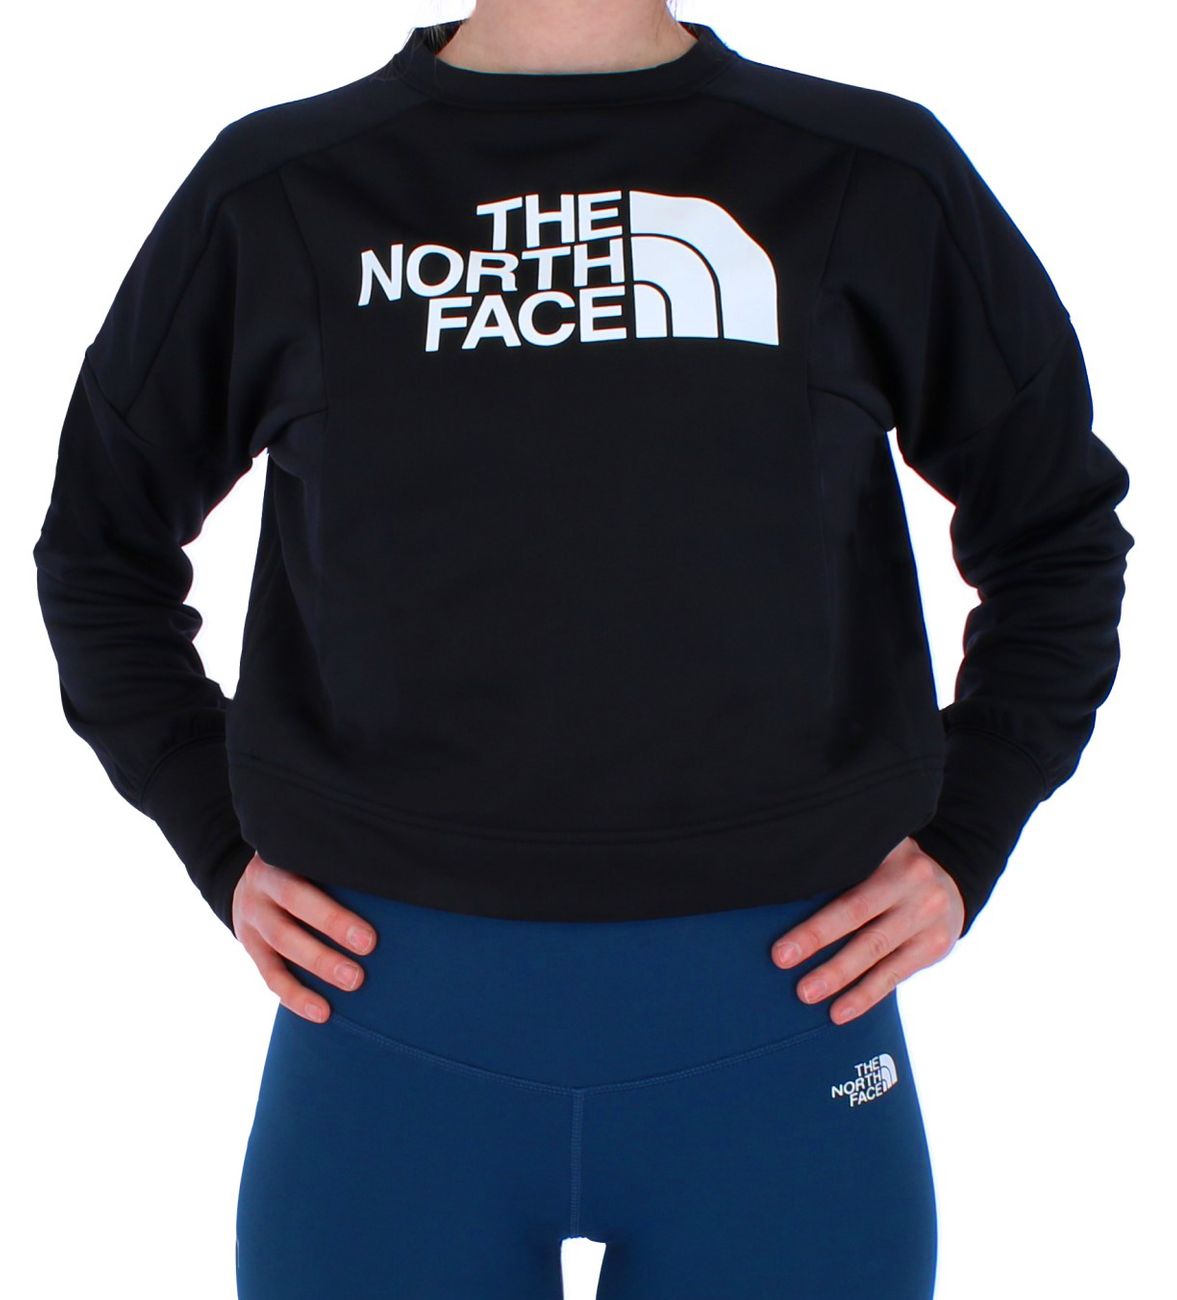 The North Face - TRAIN N LOGO Damen Fleecepullover - The North Face - SAGATOO - 192364002193